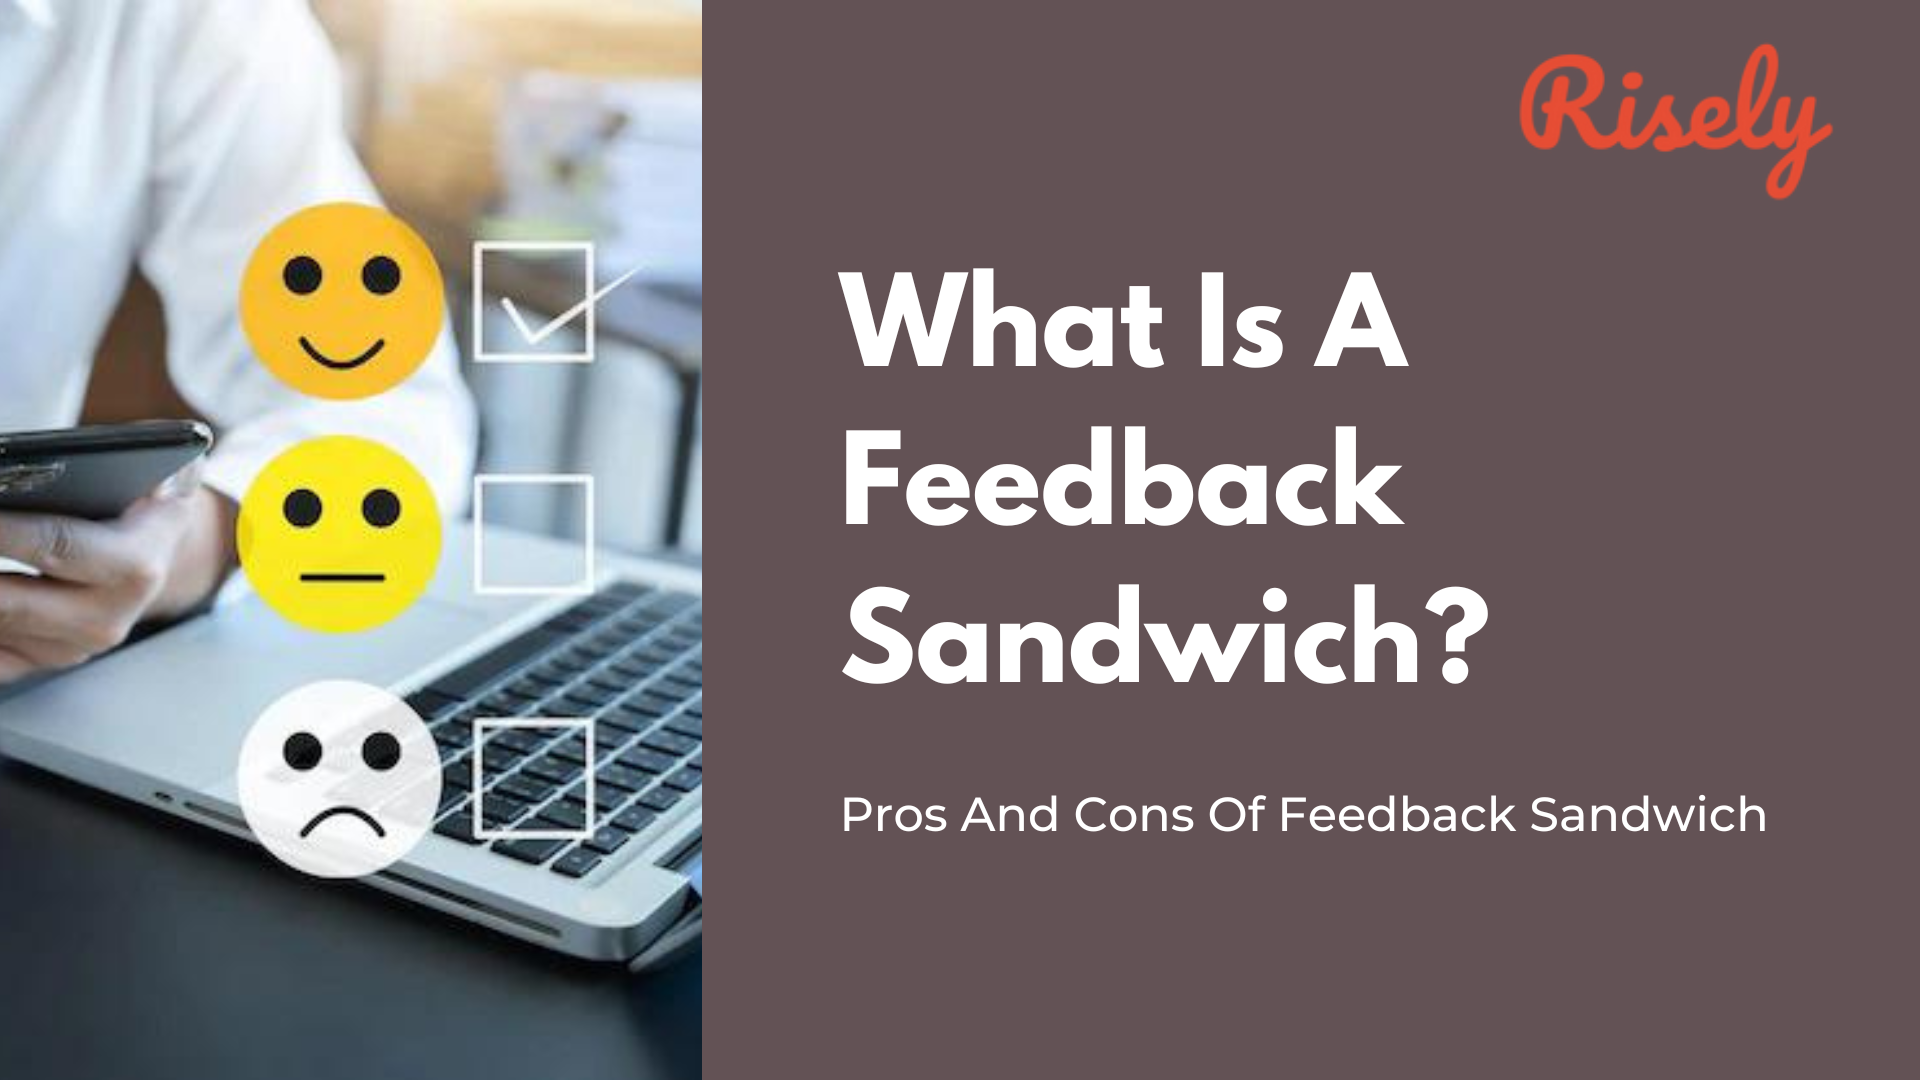 feedback sandwich